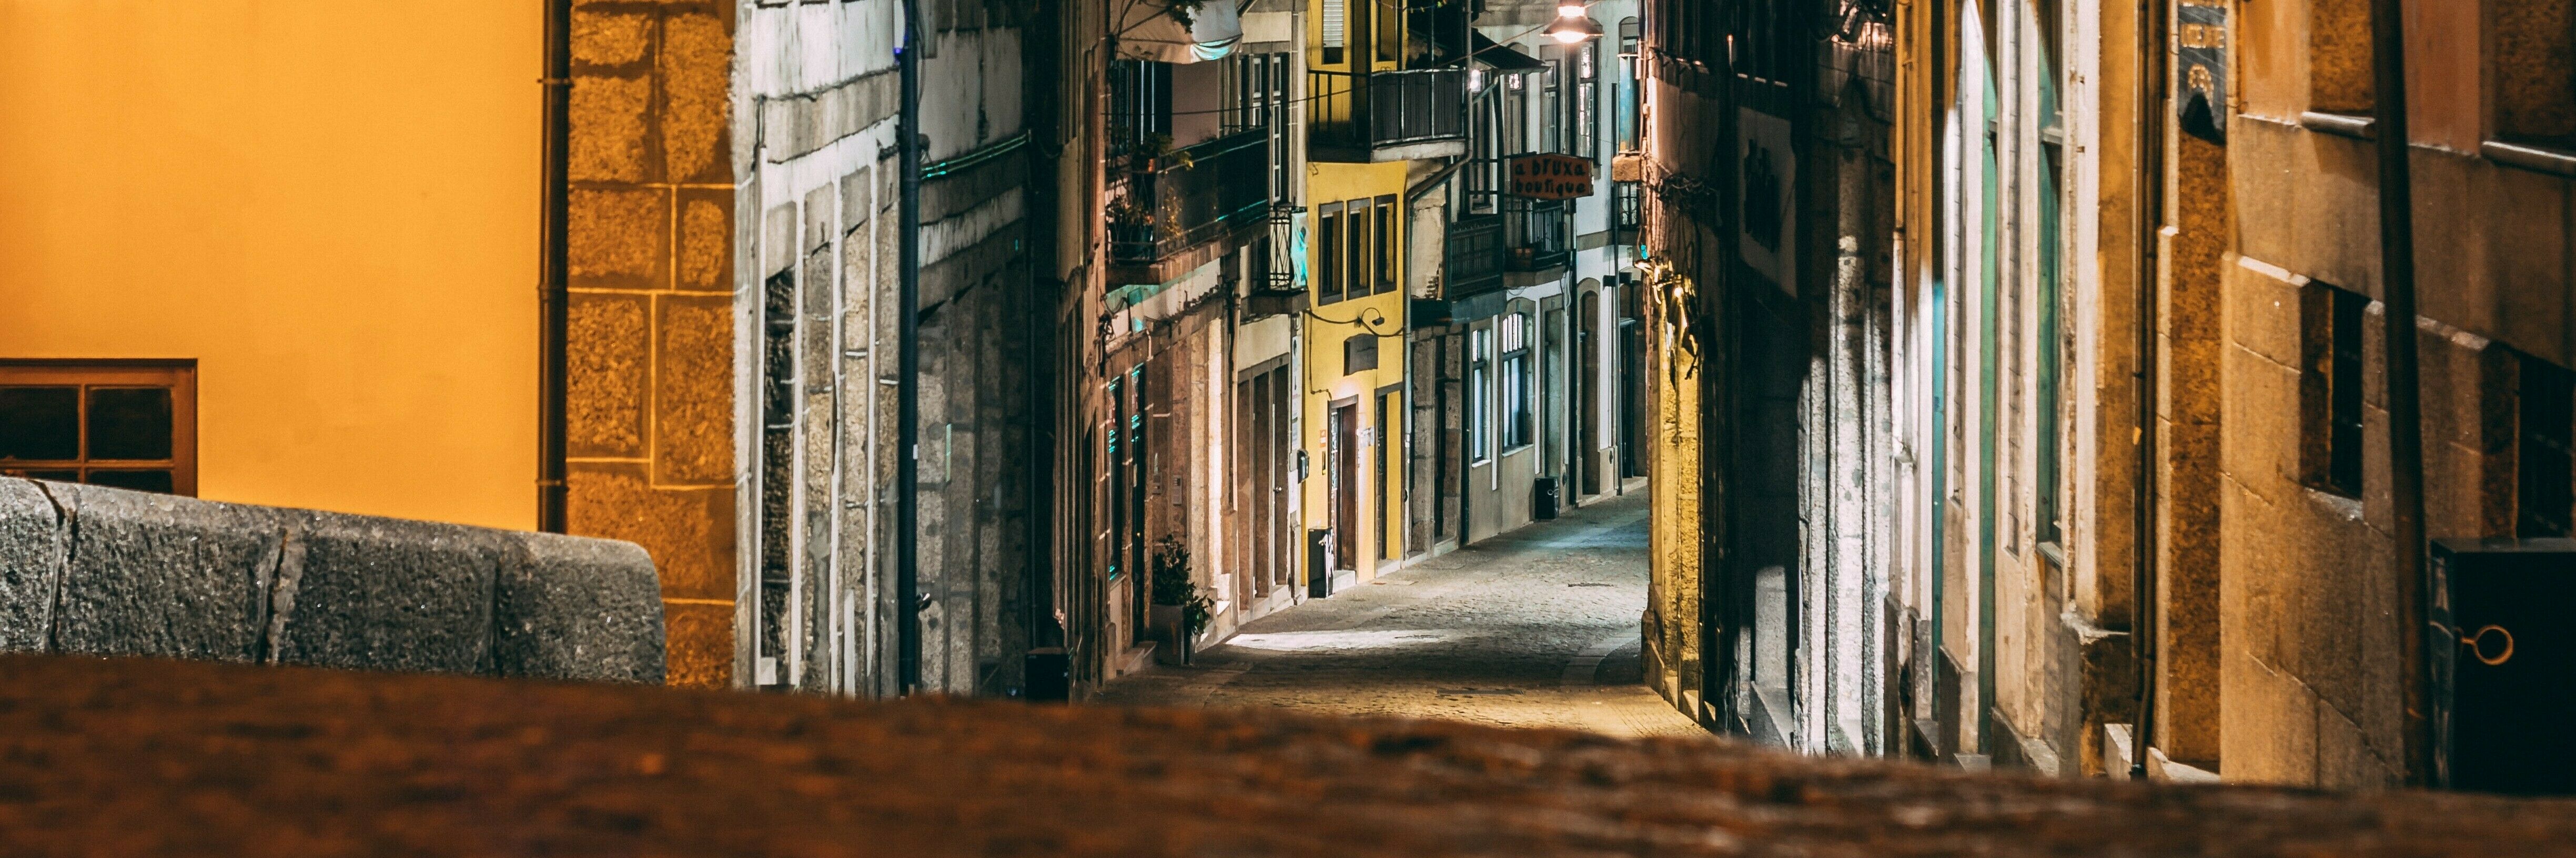 Der zweite Corona-LockDown in Portugal: leere Straßen Foto: João Barbosa